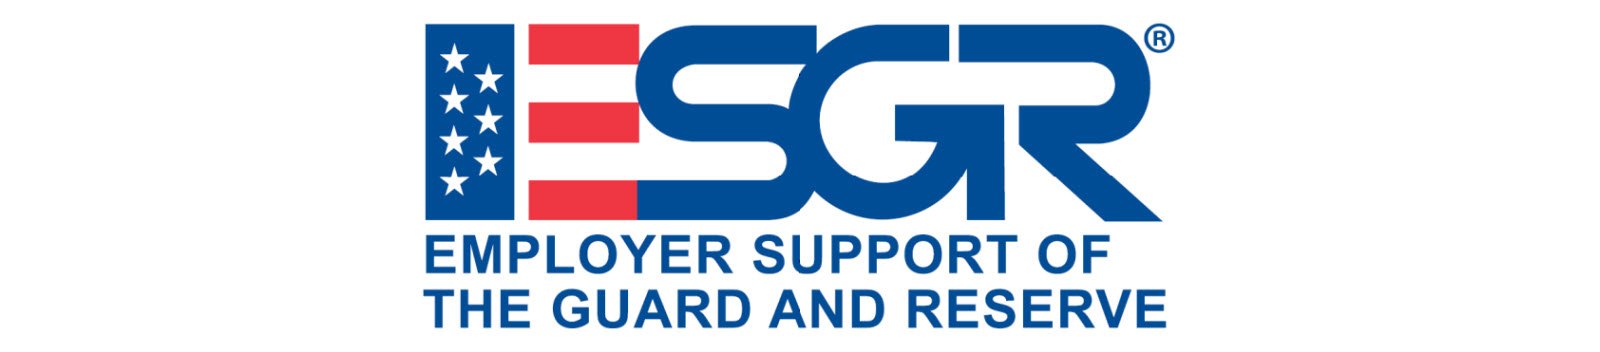 image of ESGR logo 